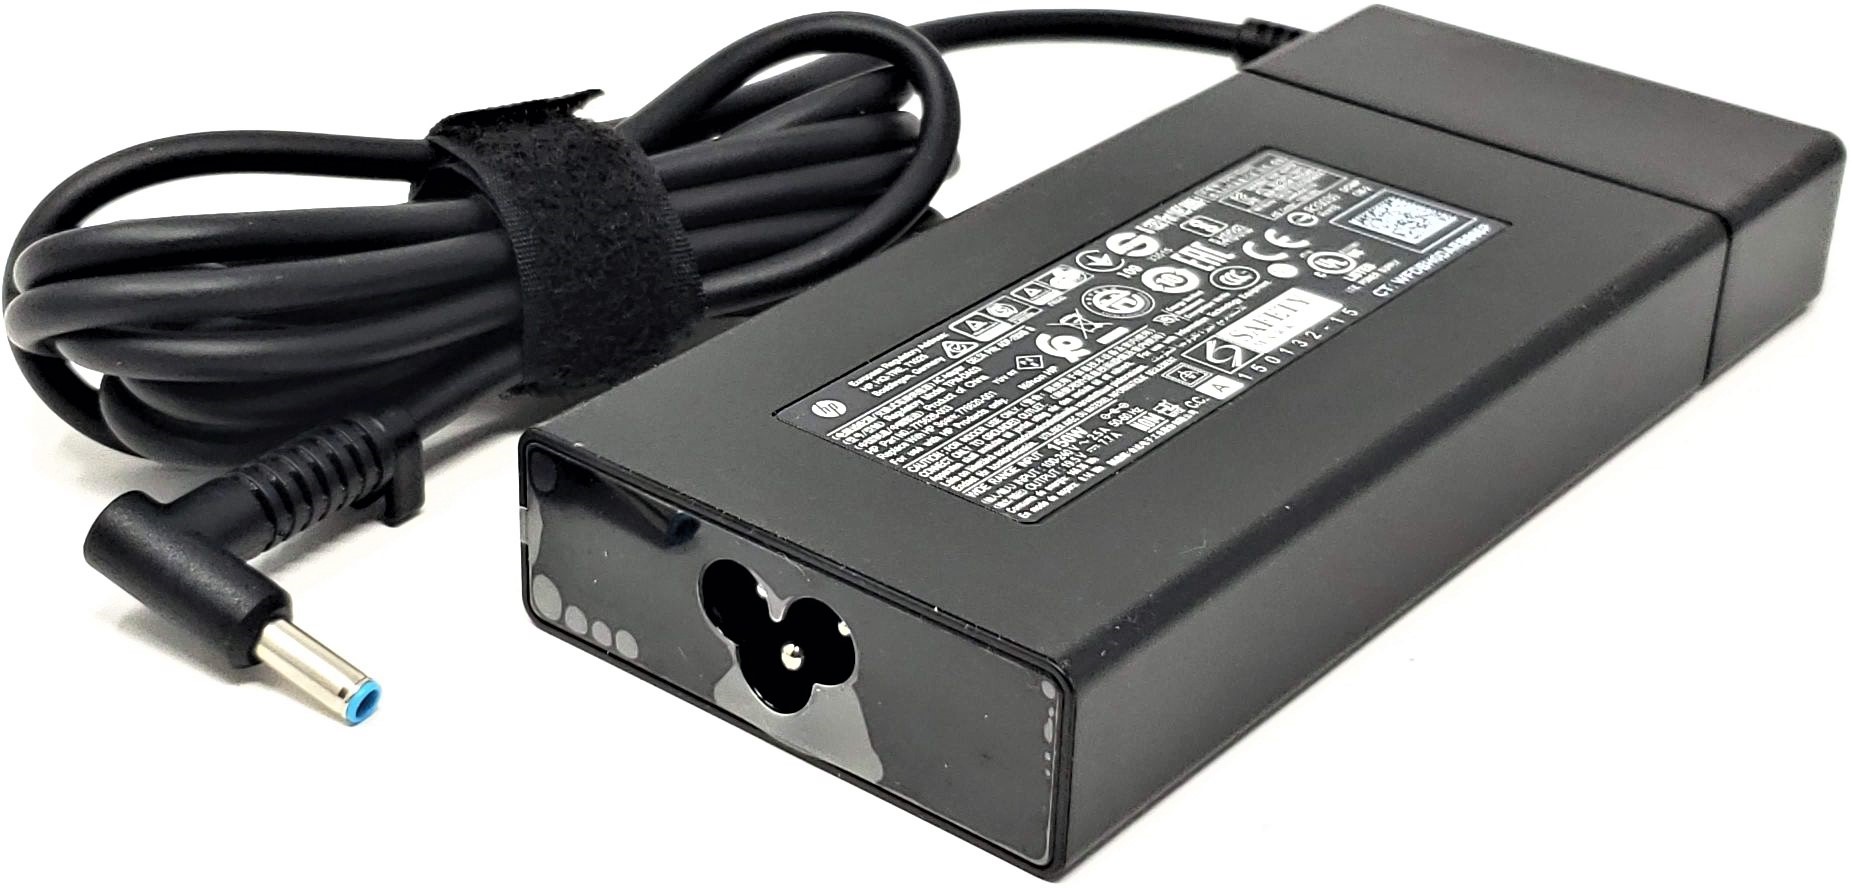 Original 150W HP 776620-001 AC Adaptateur Chargeur + Câble